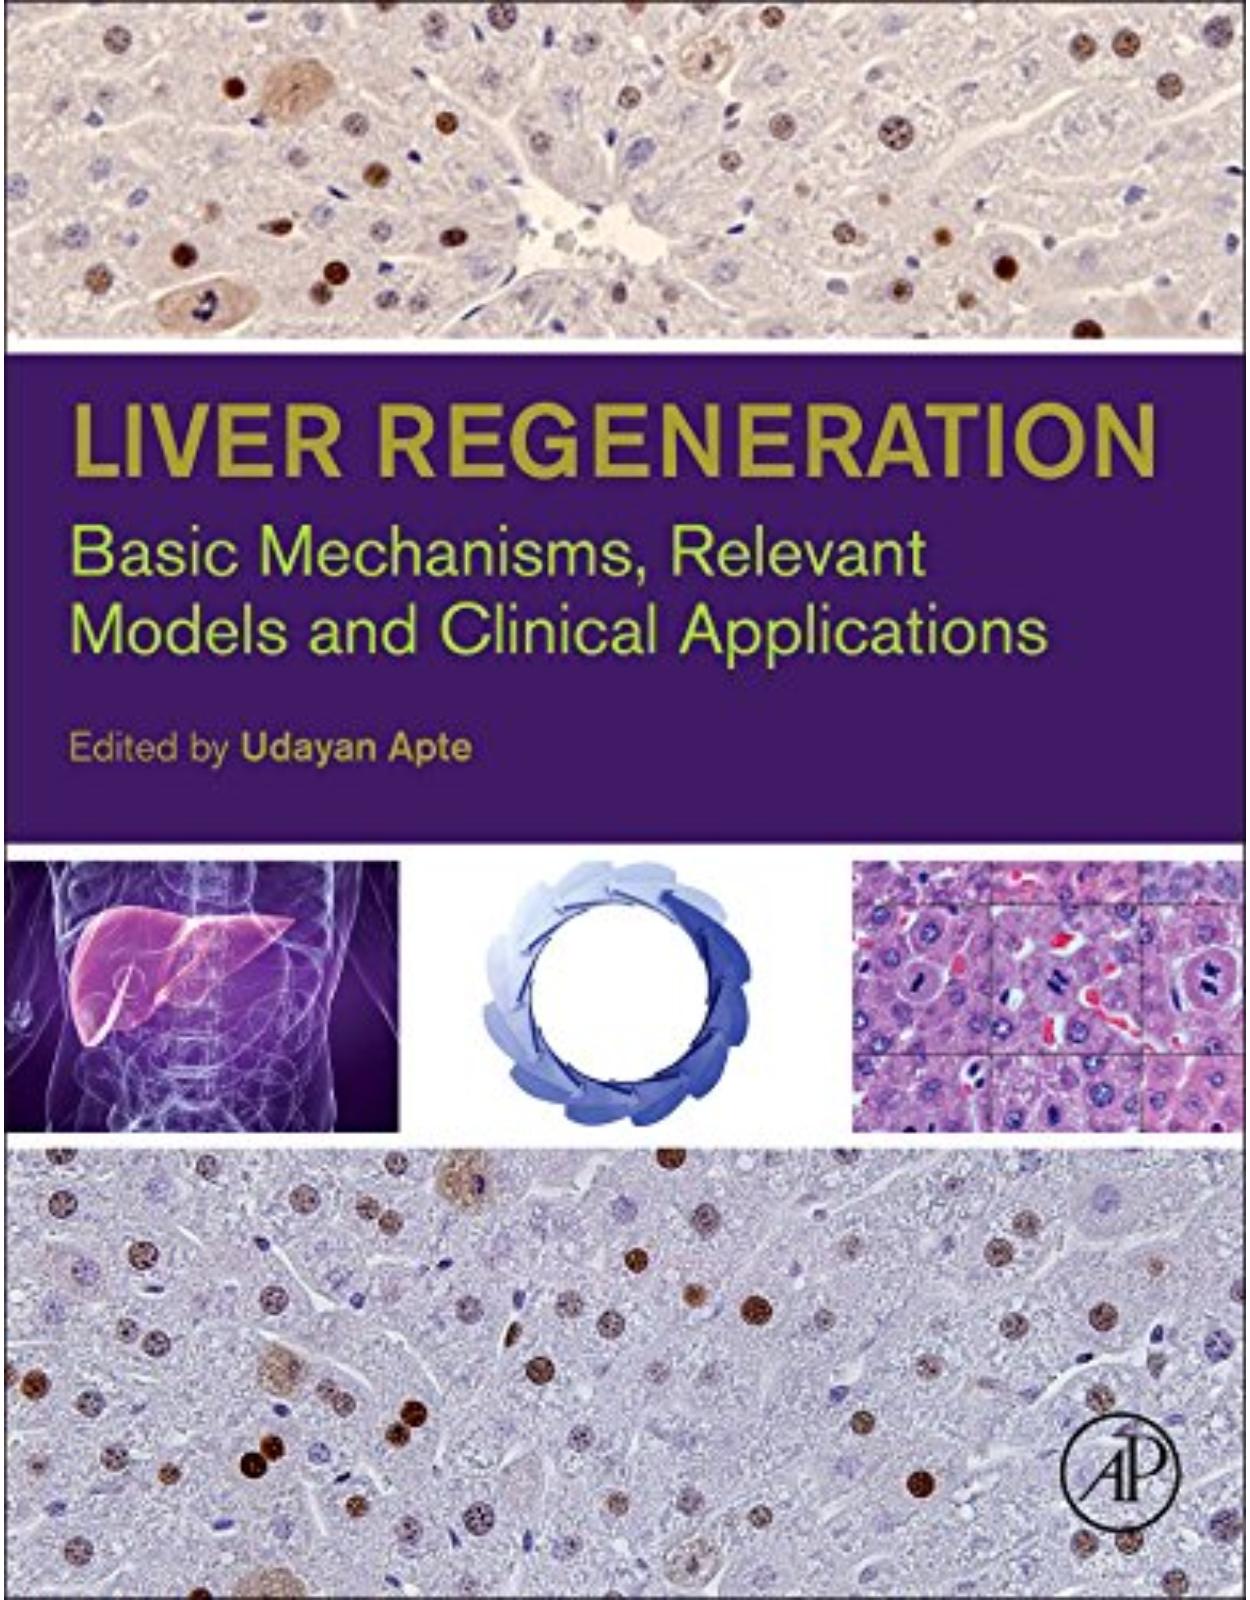 Liver Regeneration: Basic Mechanisms, Relevant Models and Clinical Applications